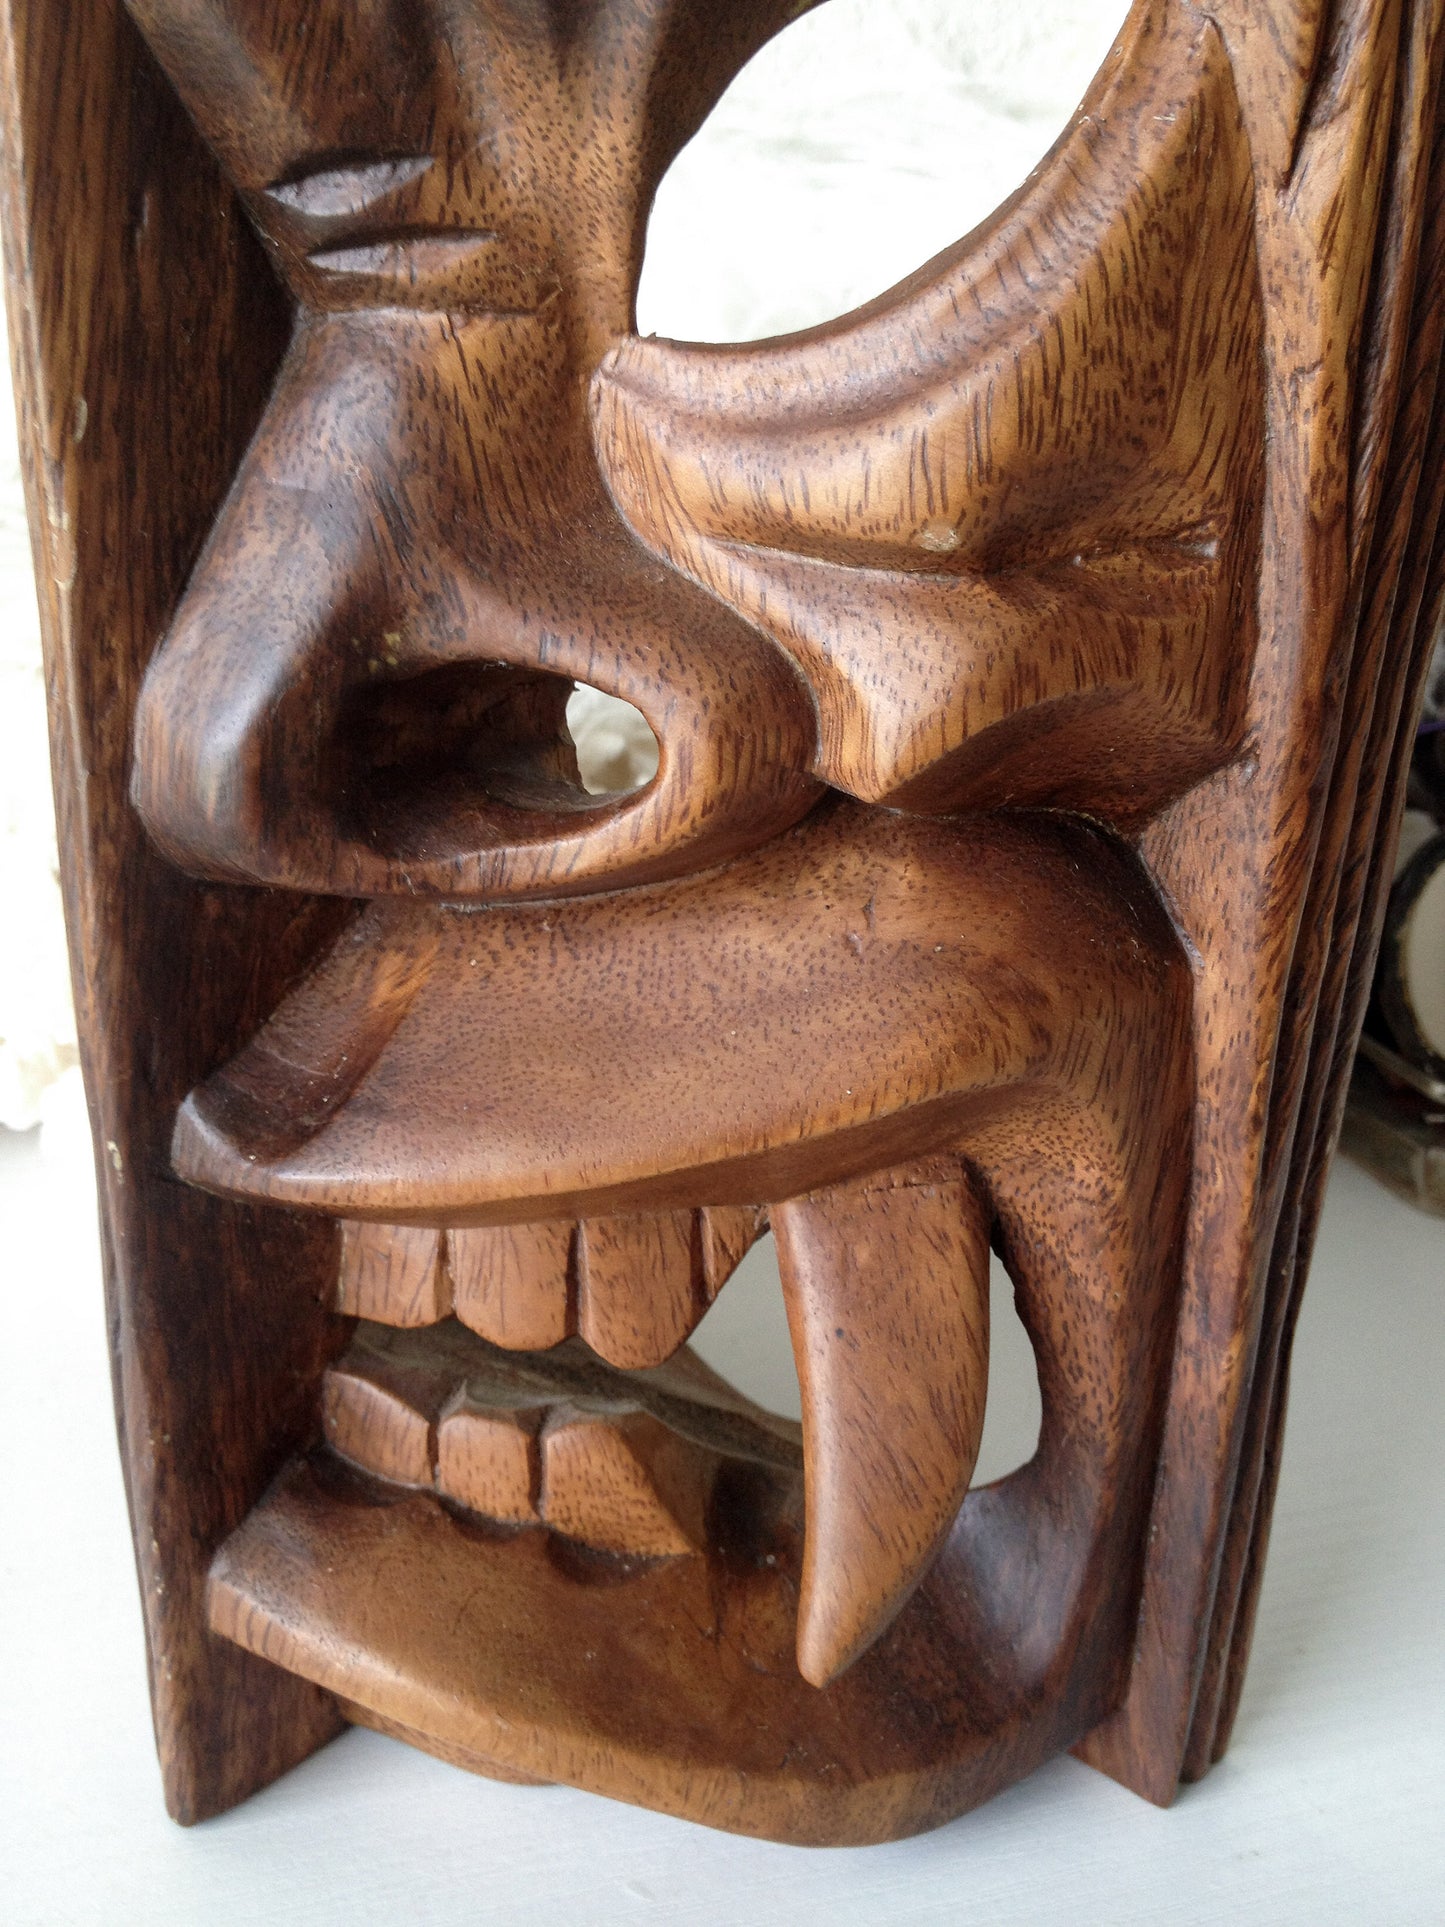 Vintage carved wooden tiki head or tribal mask statue